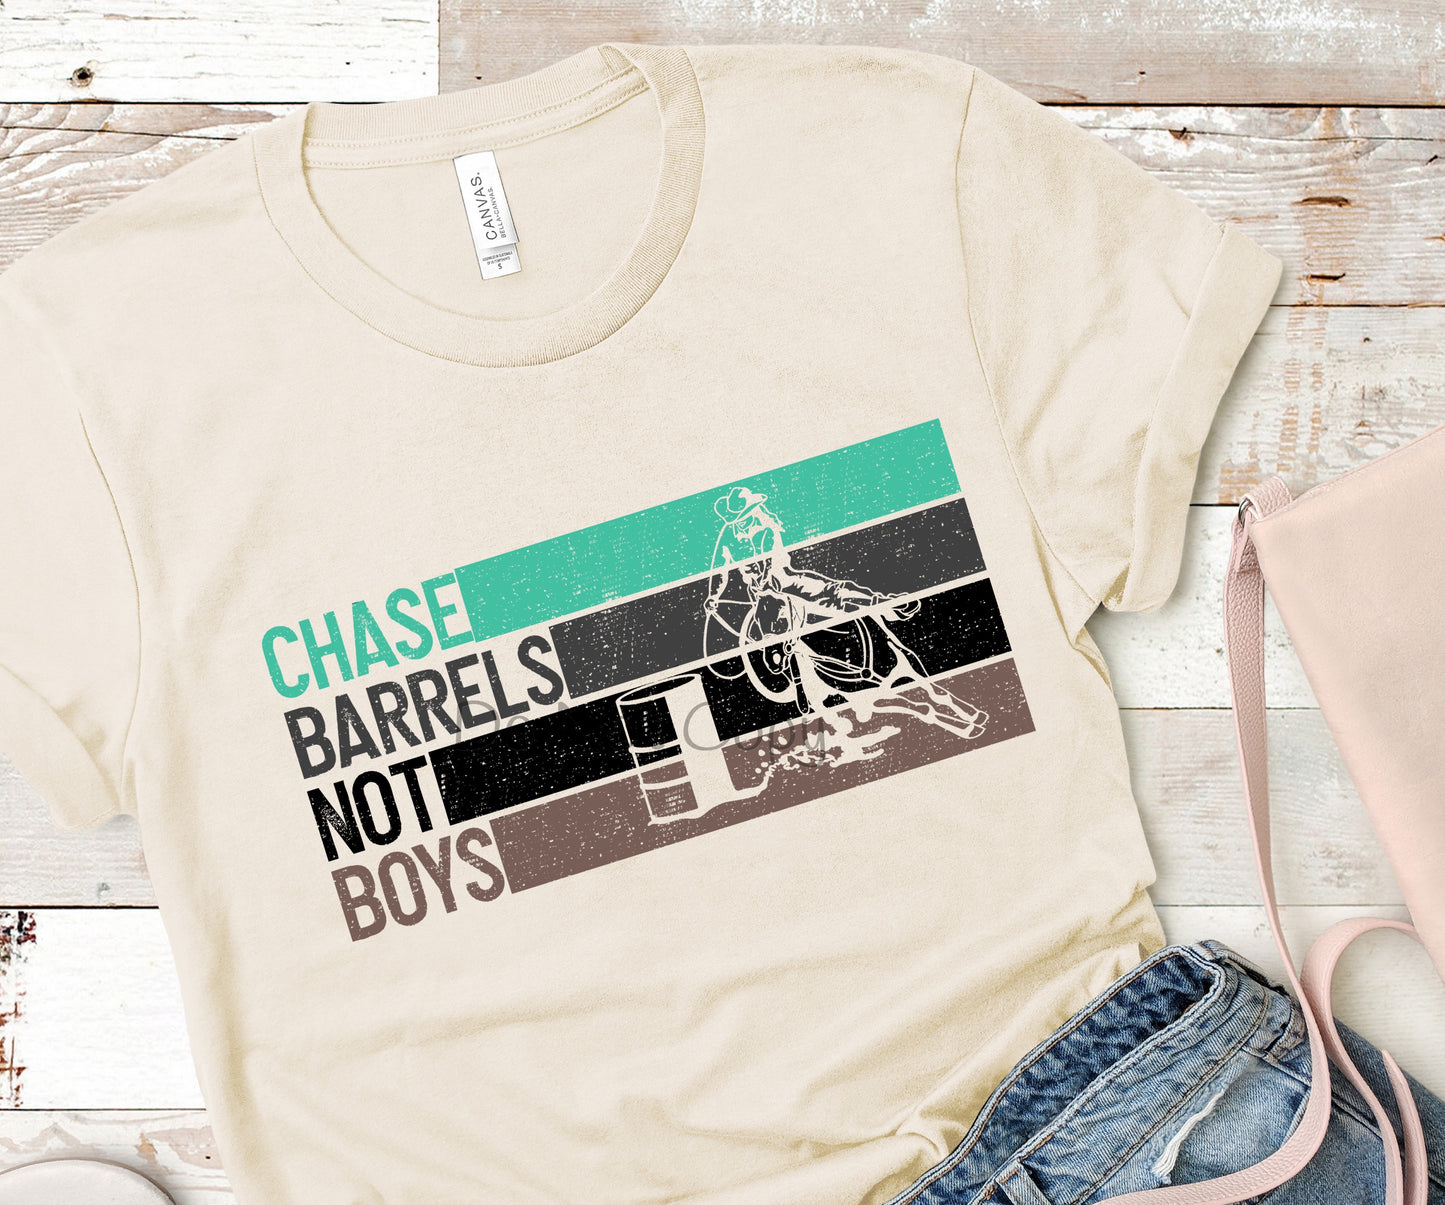 Chase barrels not boys-DTF